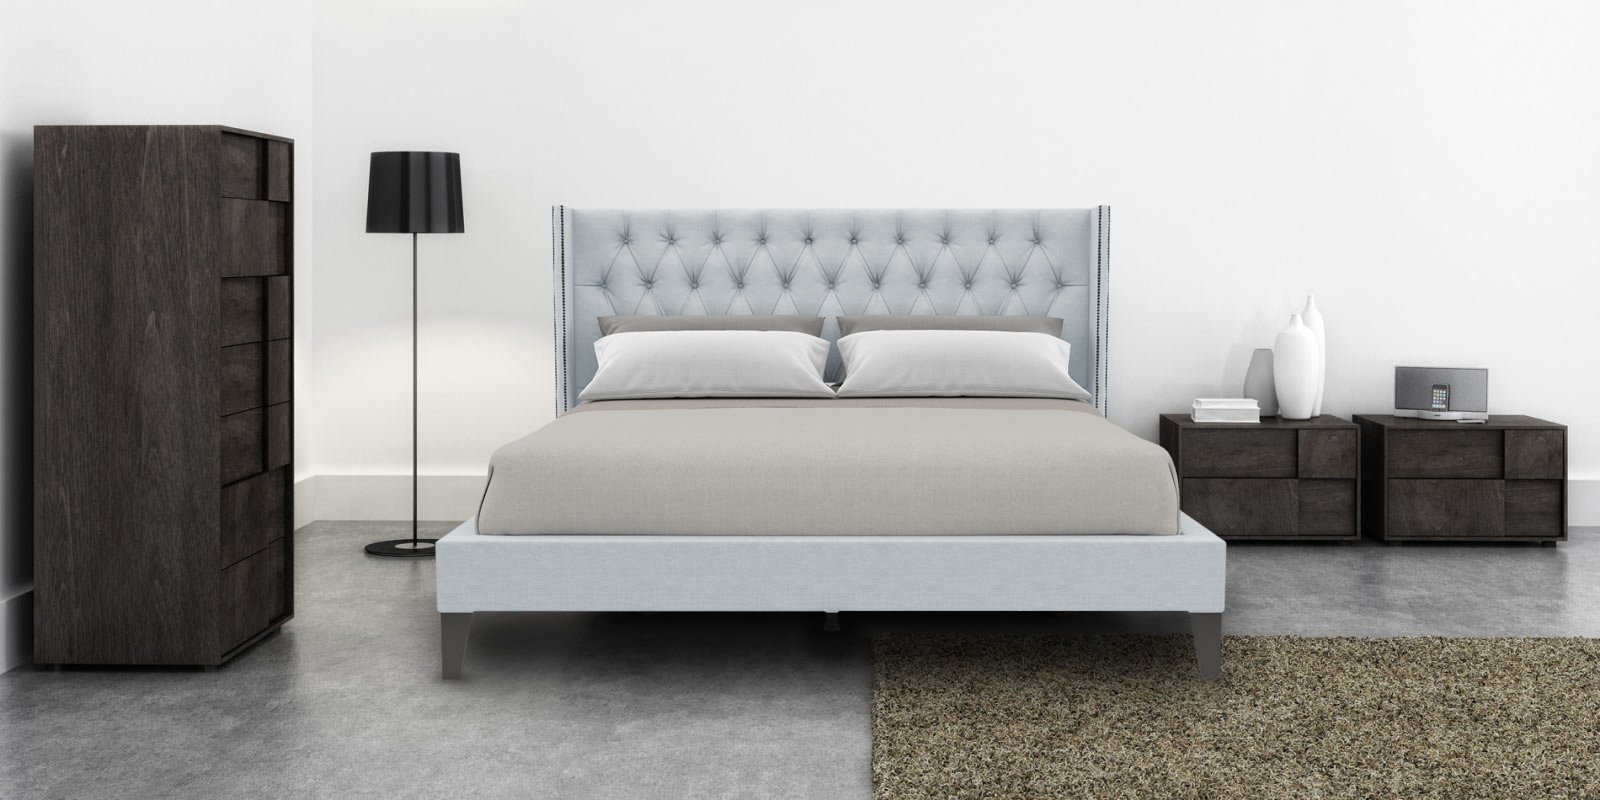 Noa King Size Upholstered Bed In Light, Light Grey Upholstered King Bed